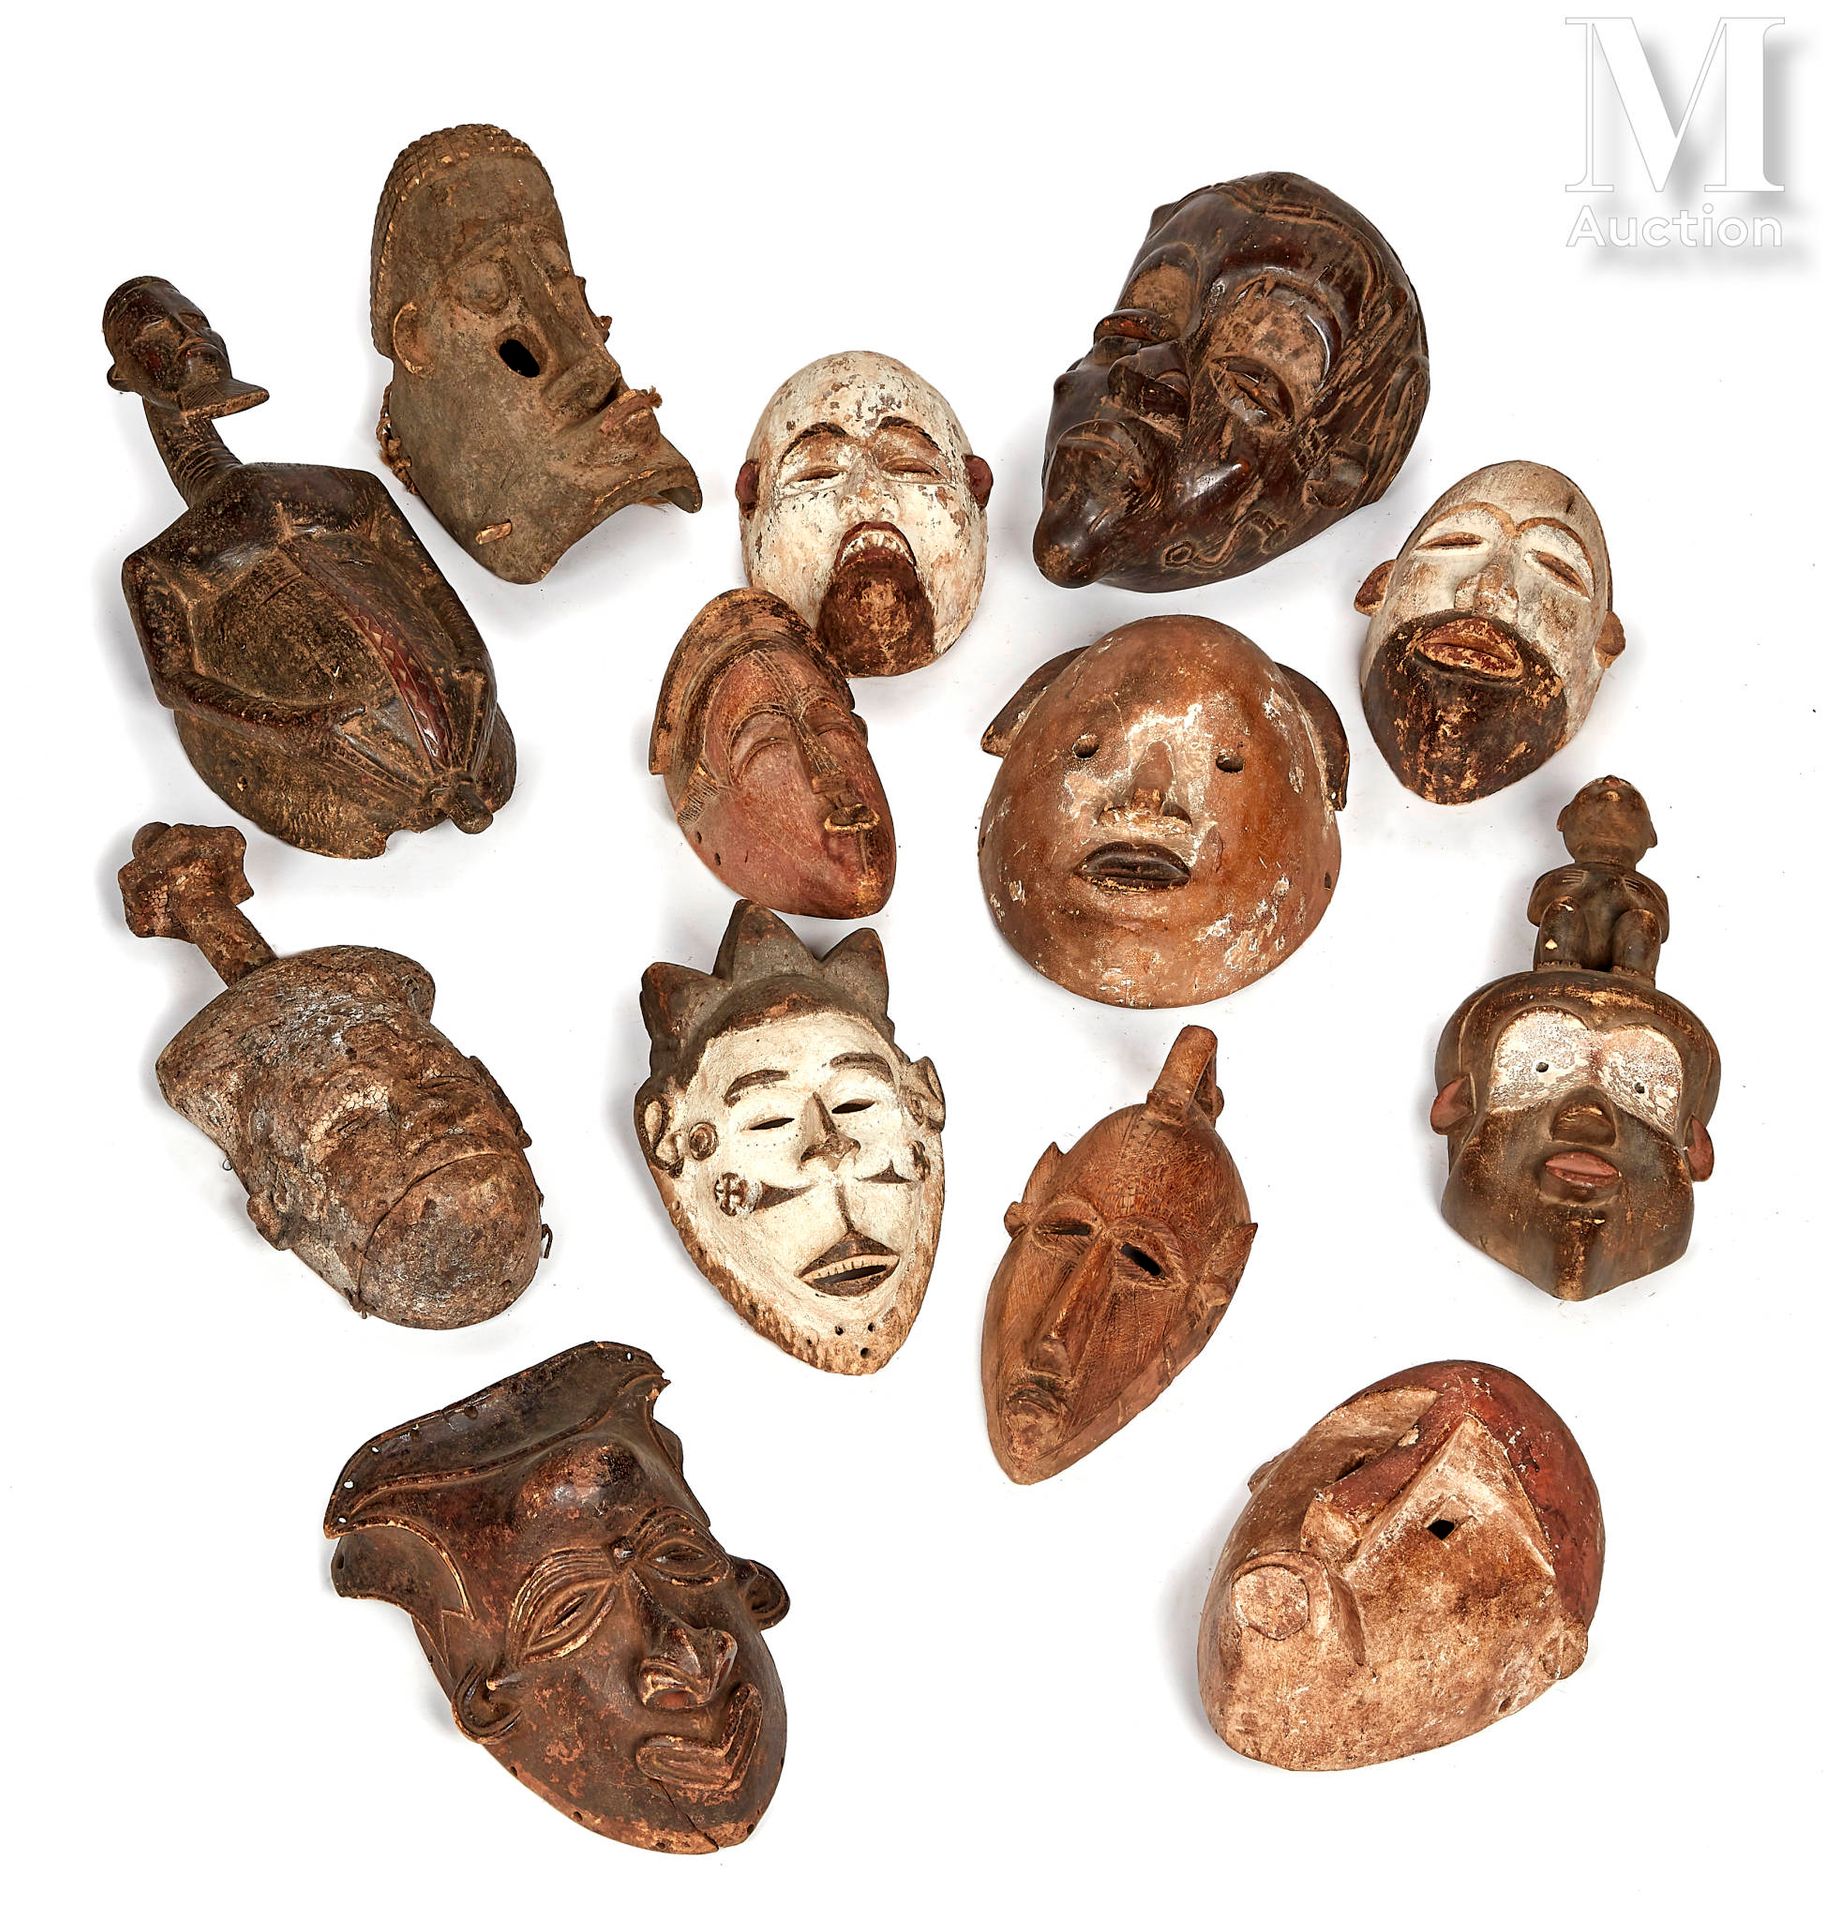 14 masques de madera
al estilo de la antigua África